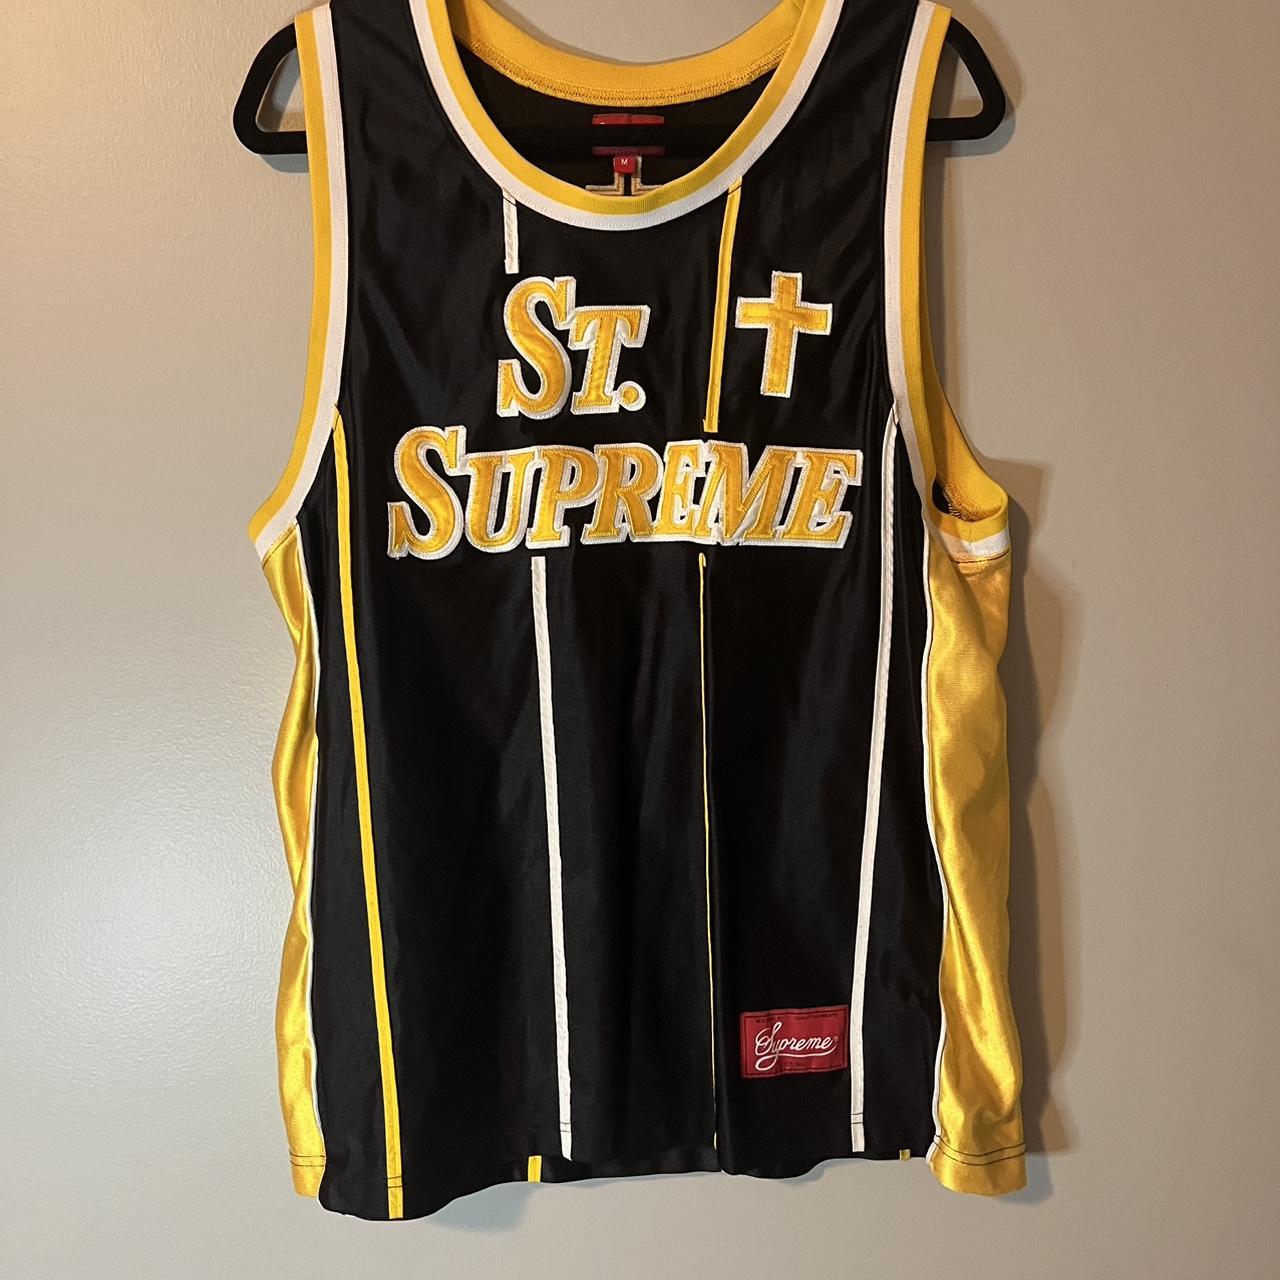 St. Supreme basketball jersey, never worn dead stock - Depop